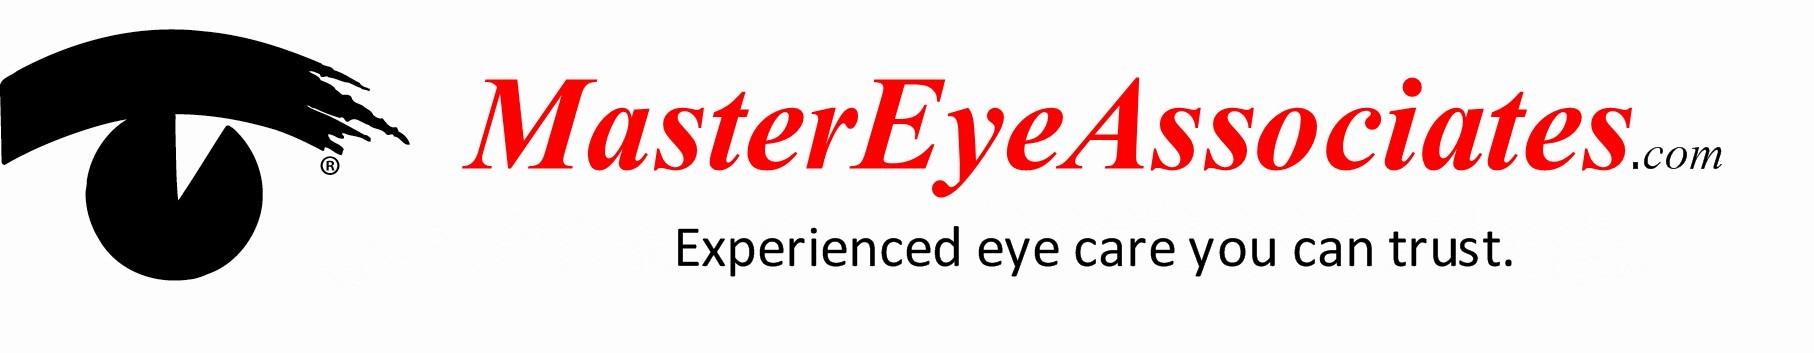 Master Eye Associates, austin eye doctors, optometrists, glaucoma specialists